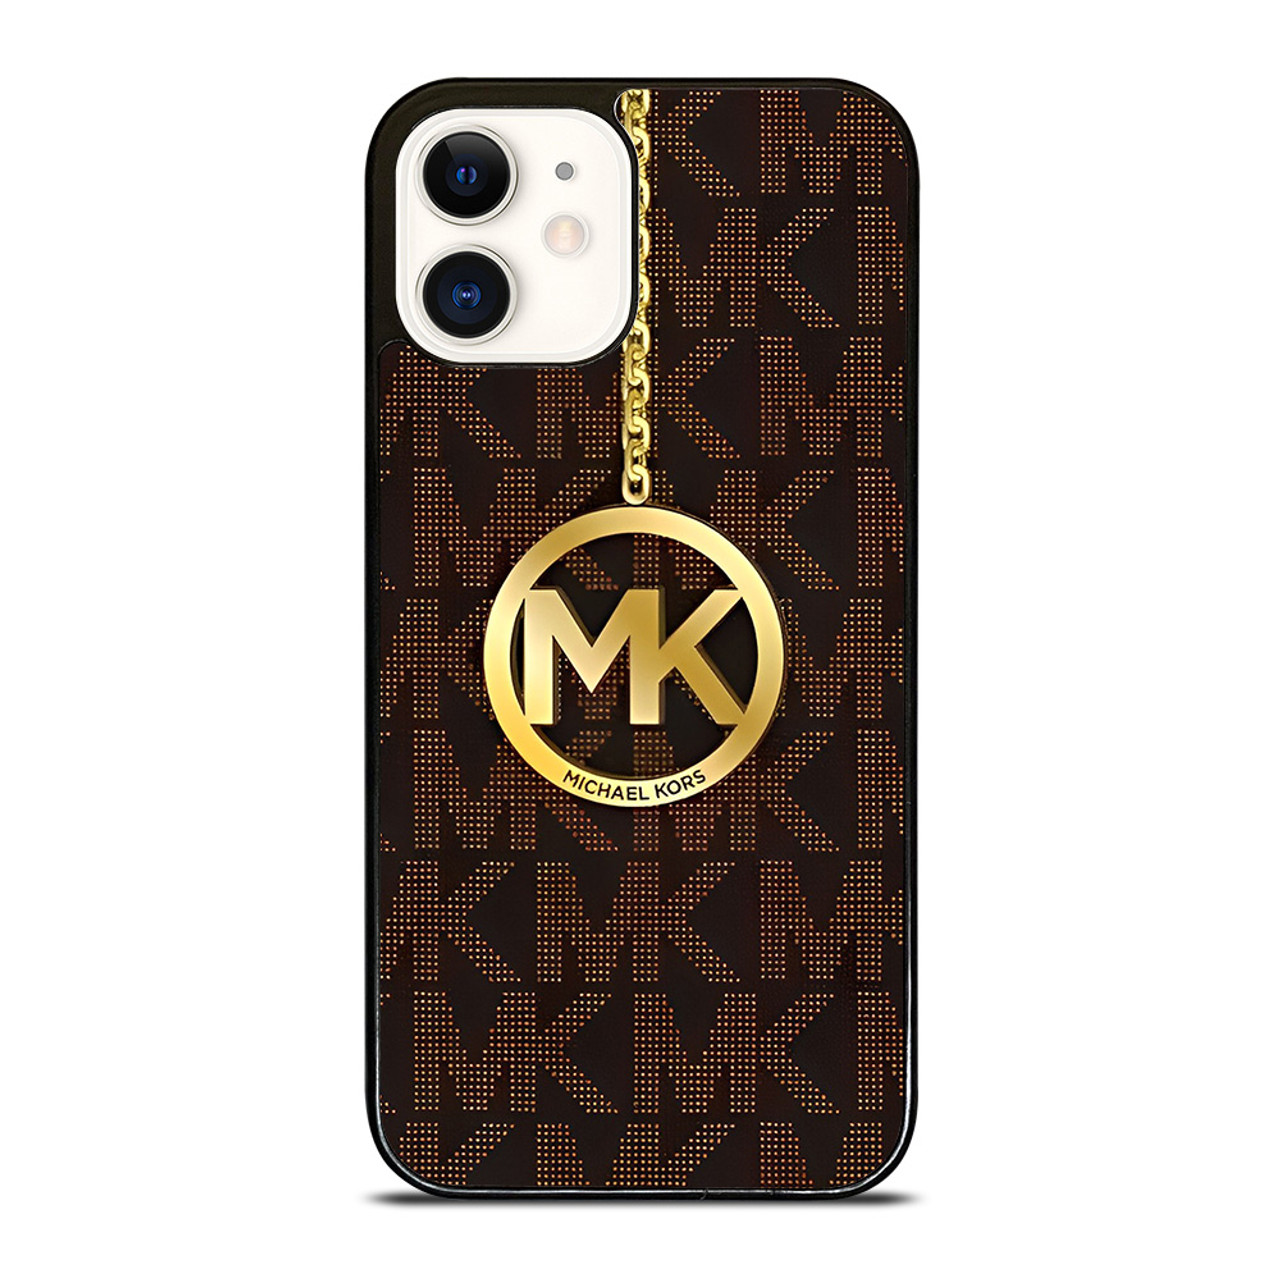 MICHAEL KORS MK GOLD EMBLEM iPhone 12 Case Cover